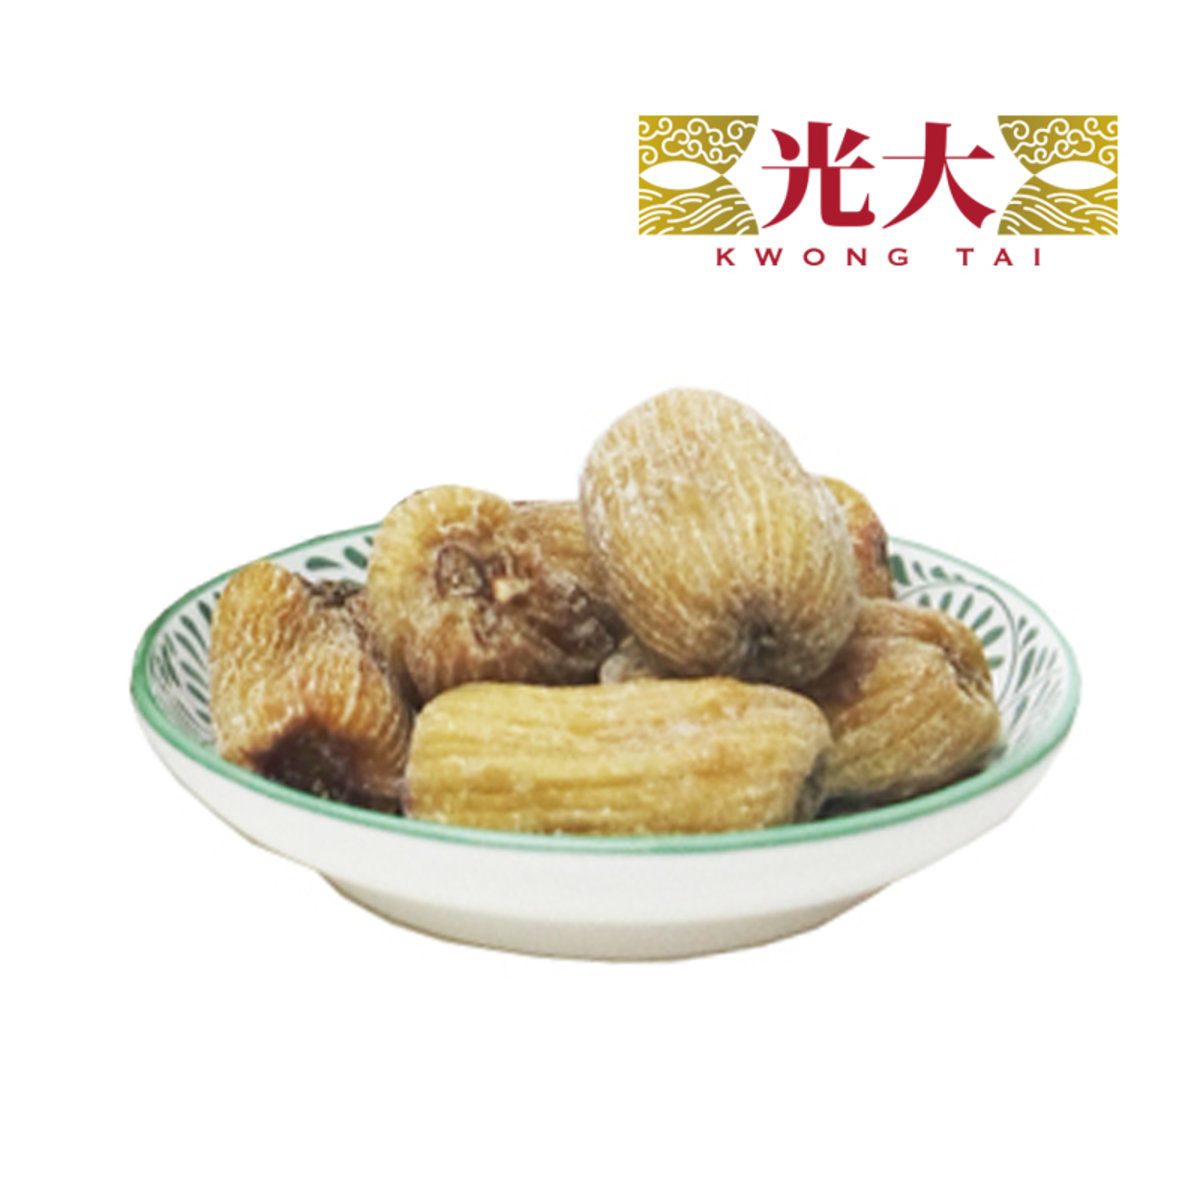 Dried Honey Dates (600g)